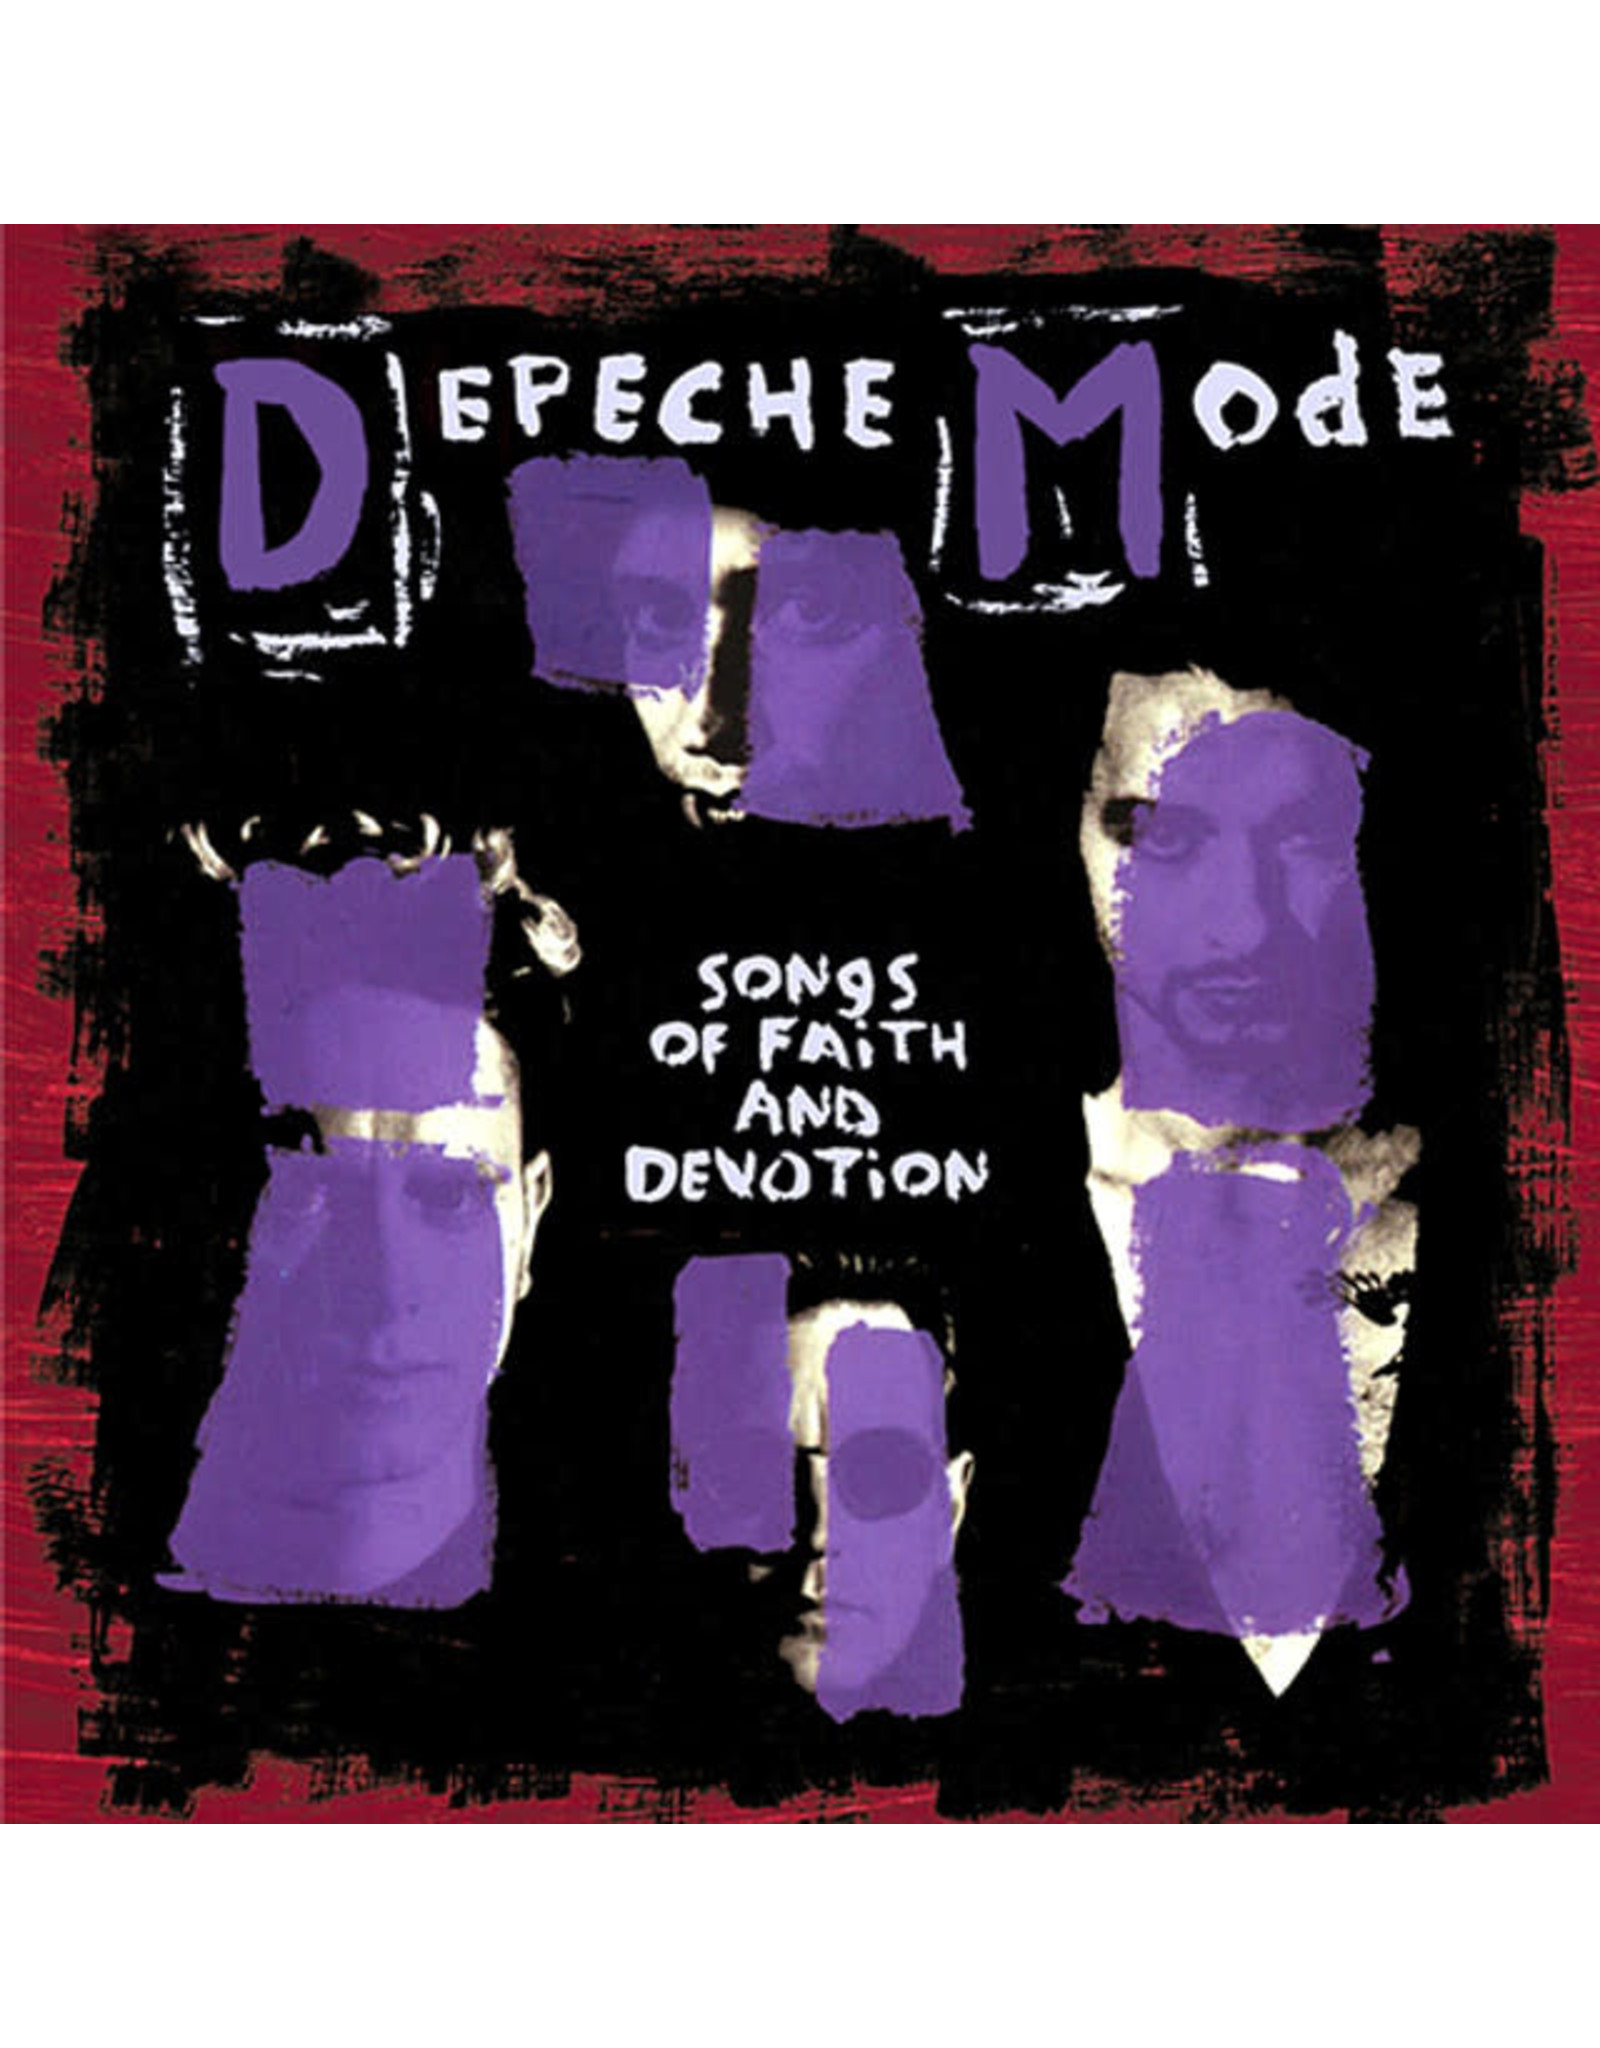 Depeche Mode: Songs of Faith & Devotion LP - Listen